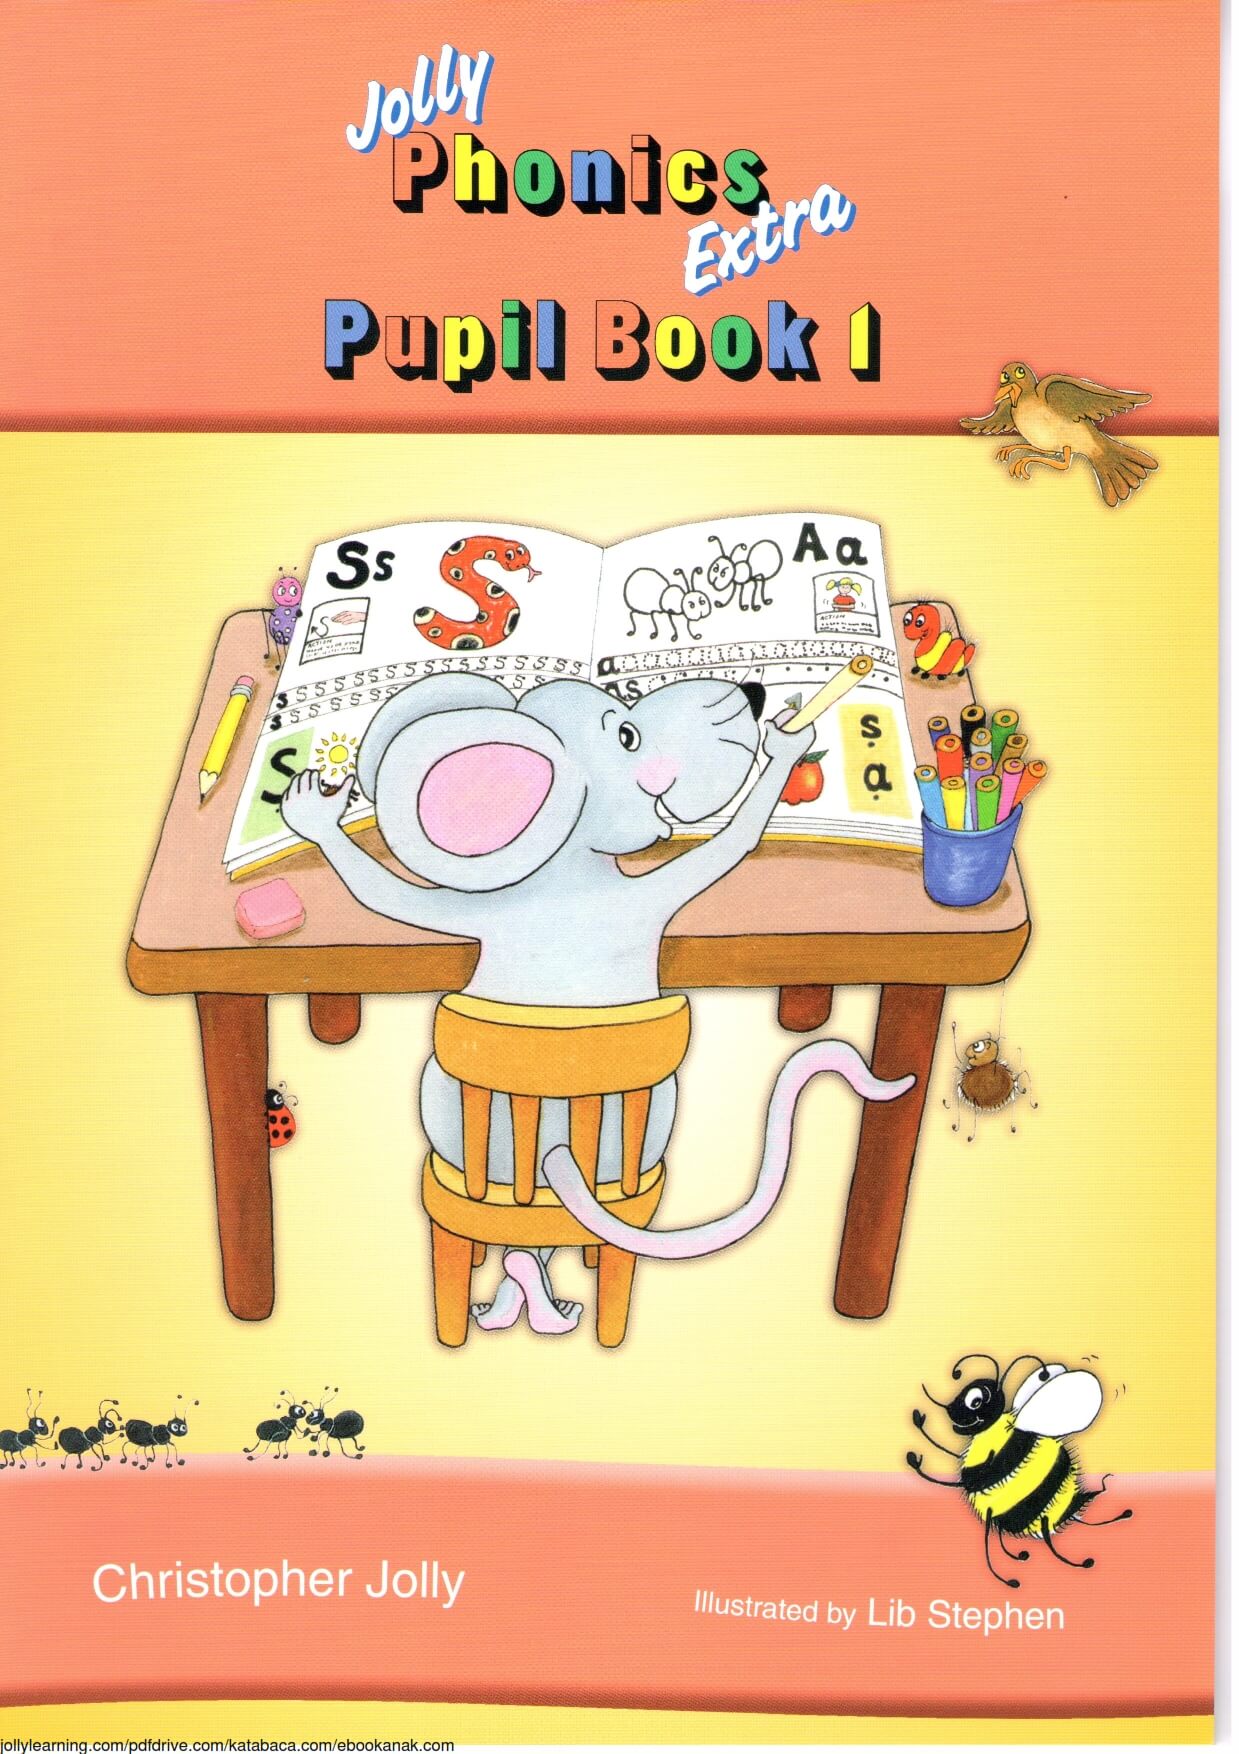 Ebook Jolly Phonics Pupil Book 1 1 Ebook Anak